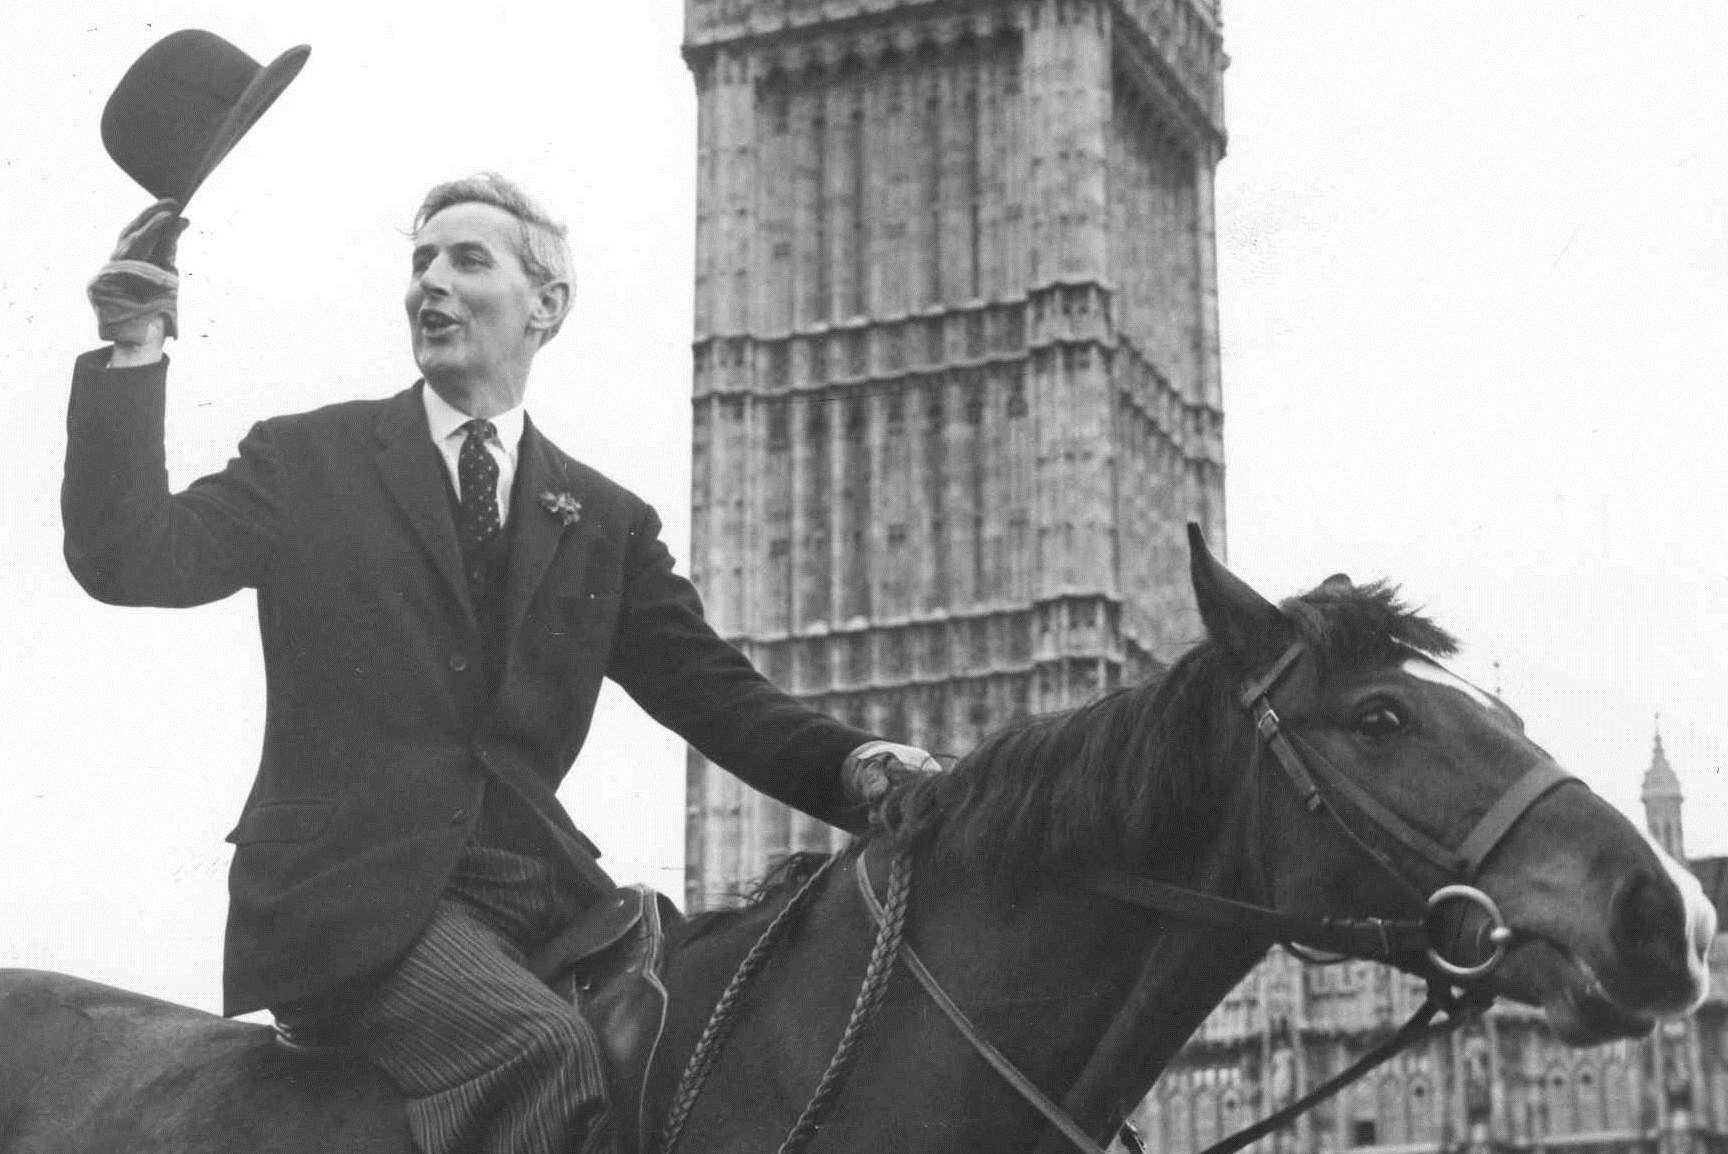 Sir John outside Parliament on his horse